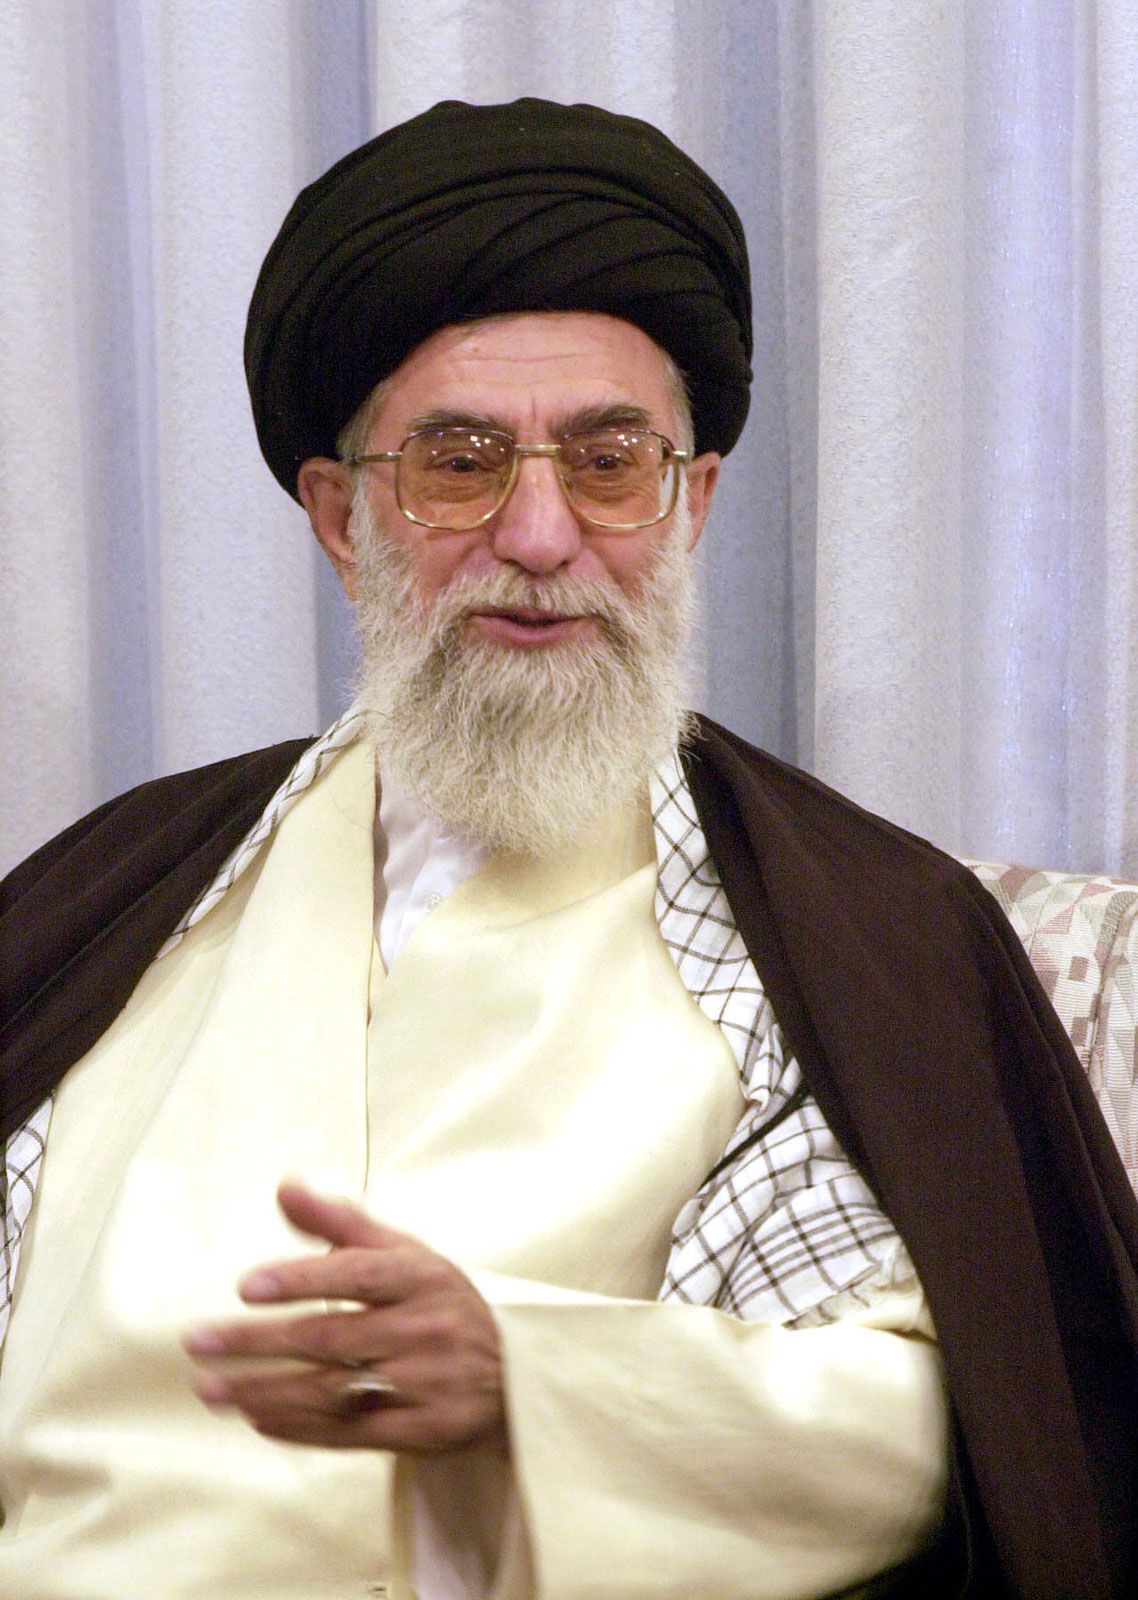 Ali-Khamenei-2002.jpg